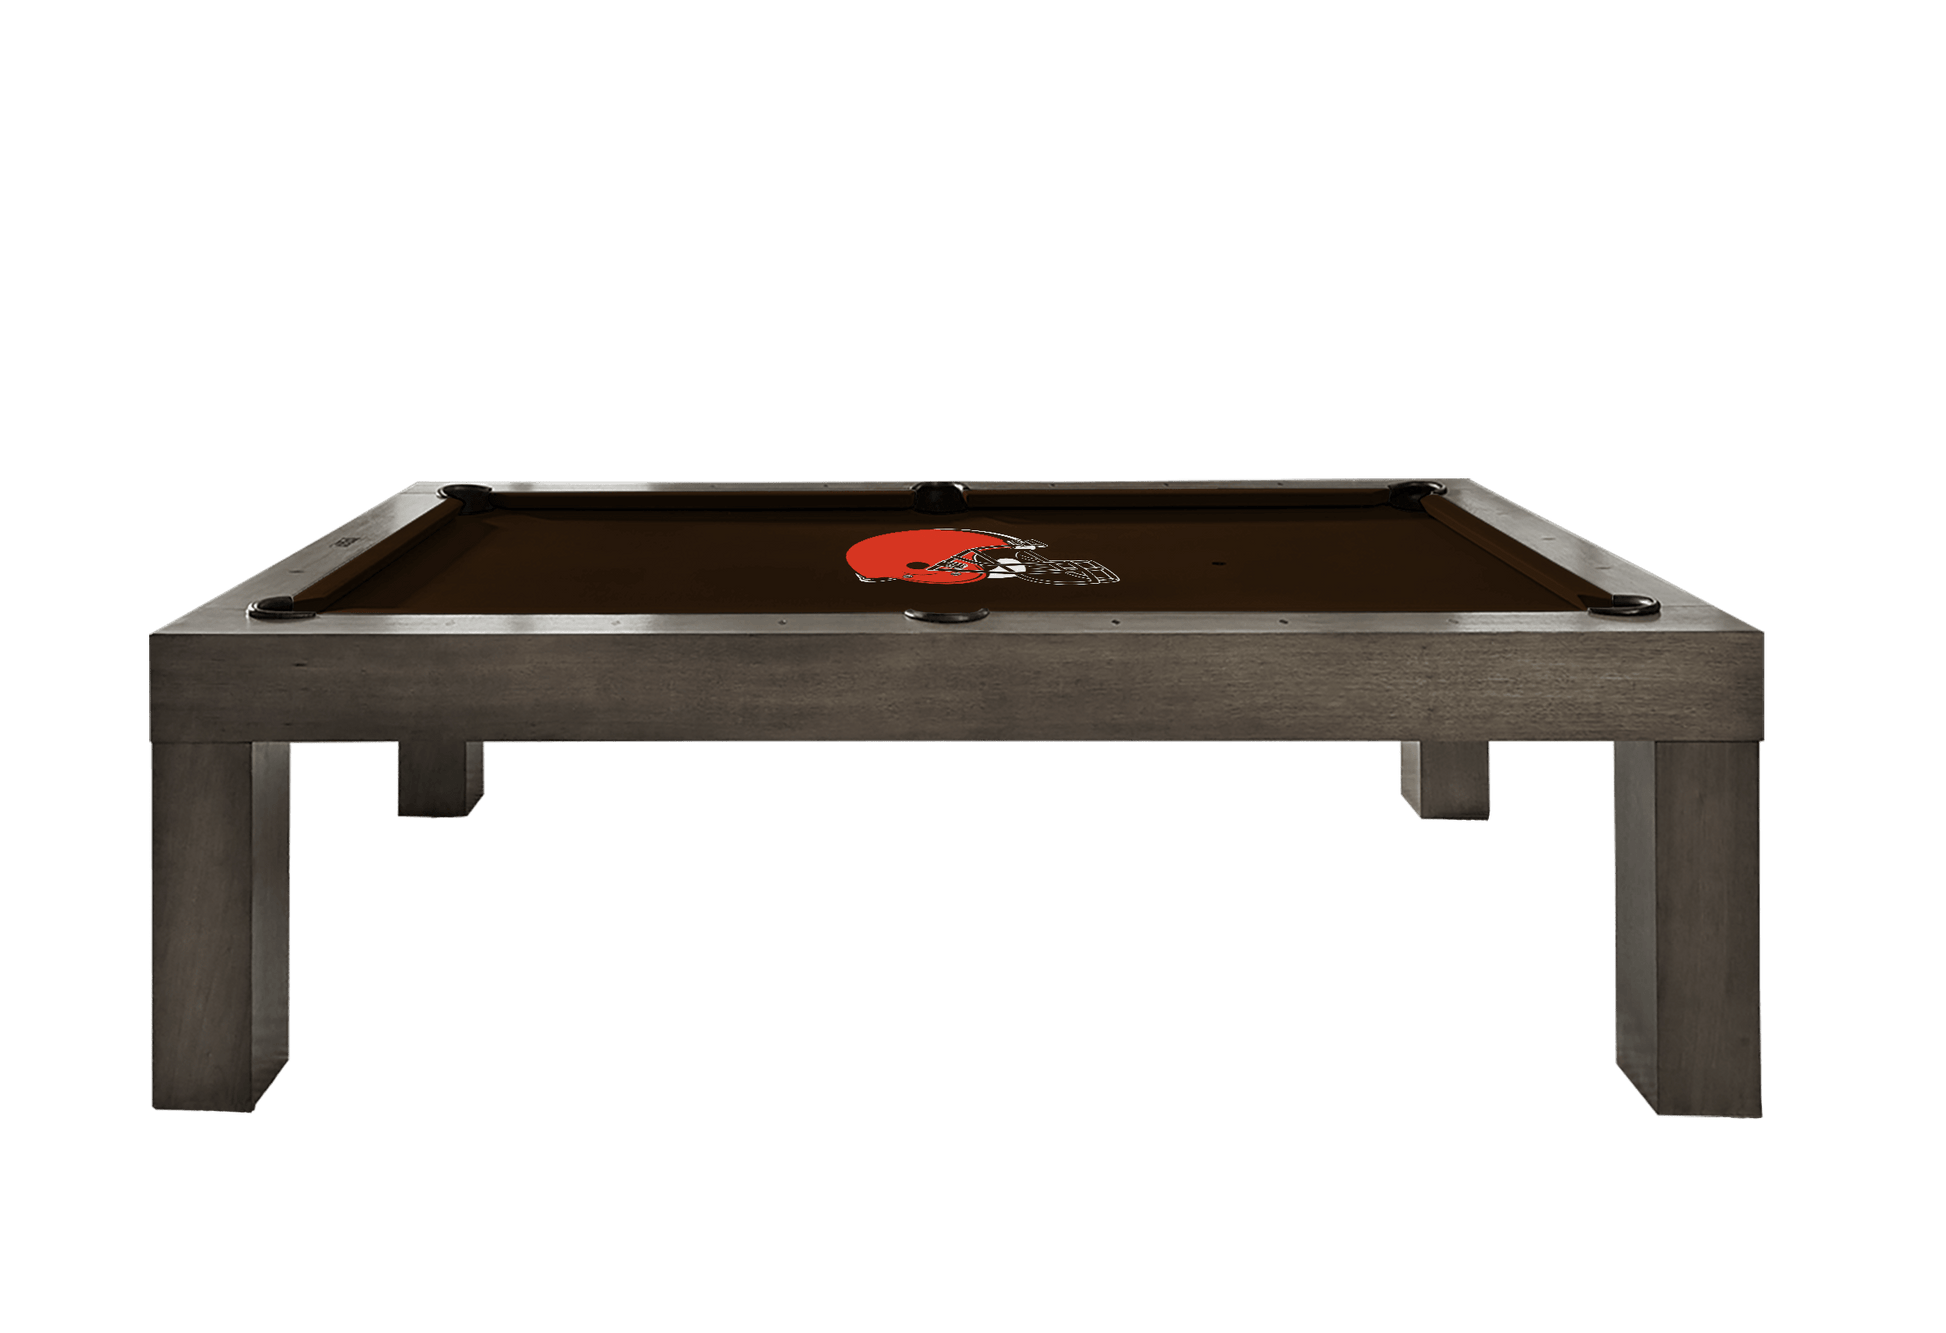 Cleveland Browns Premium Pool Table Bundle - Charcoal Pool Bundle Home Arcade Games   